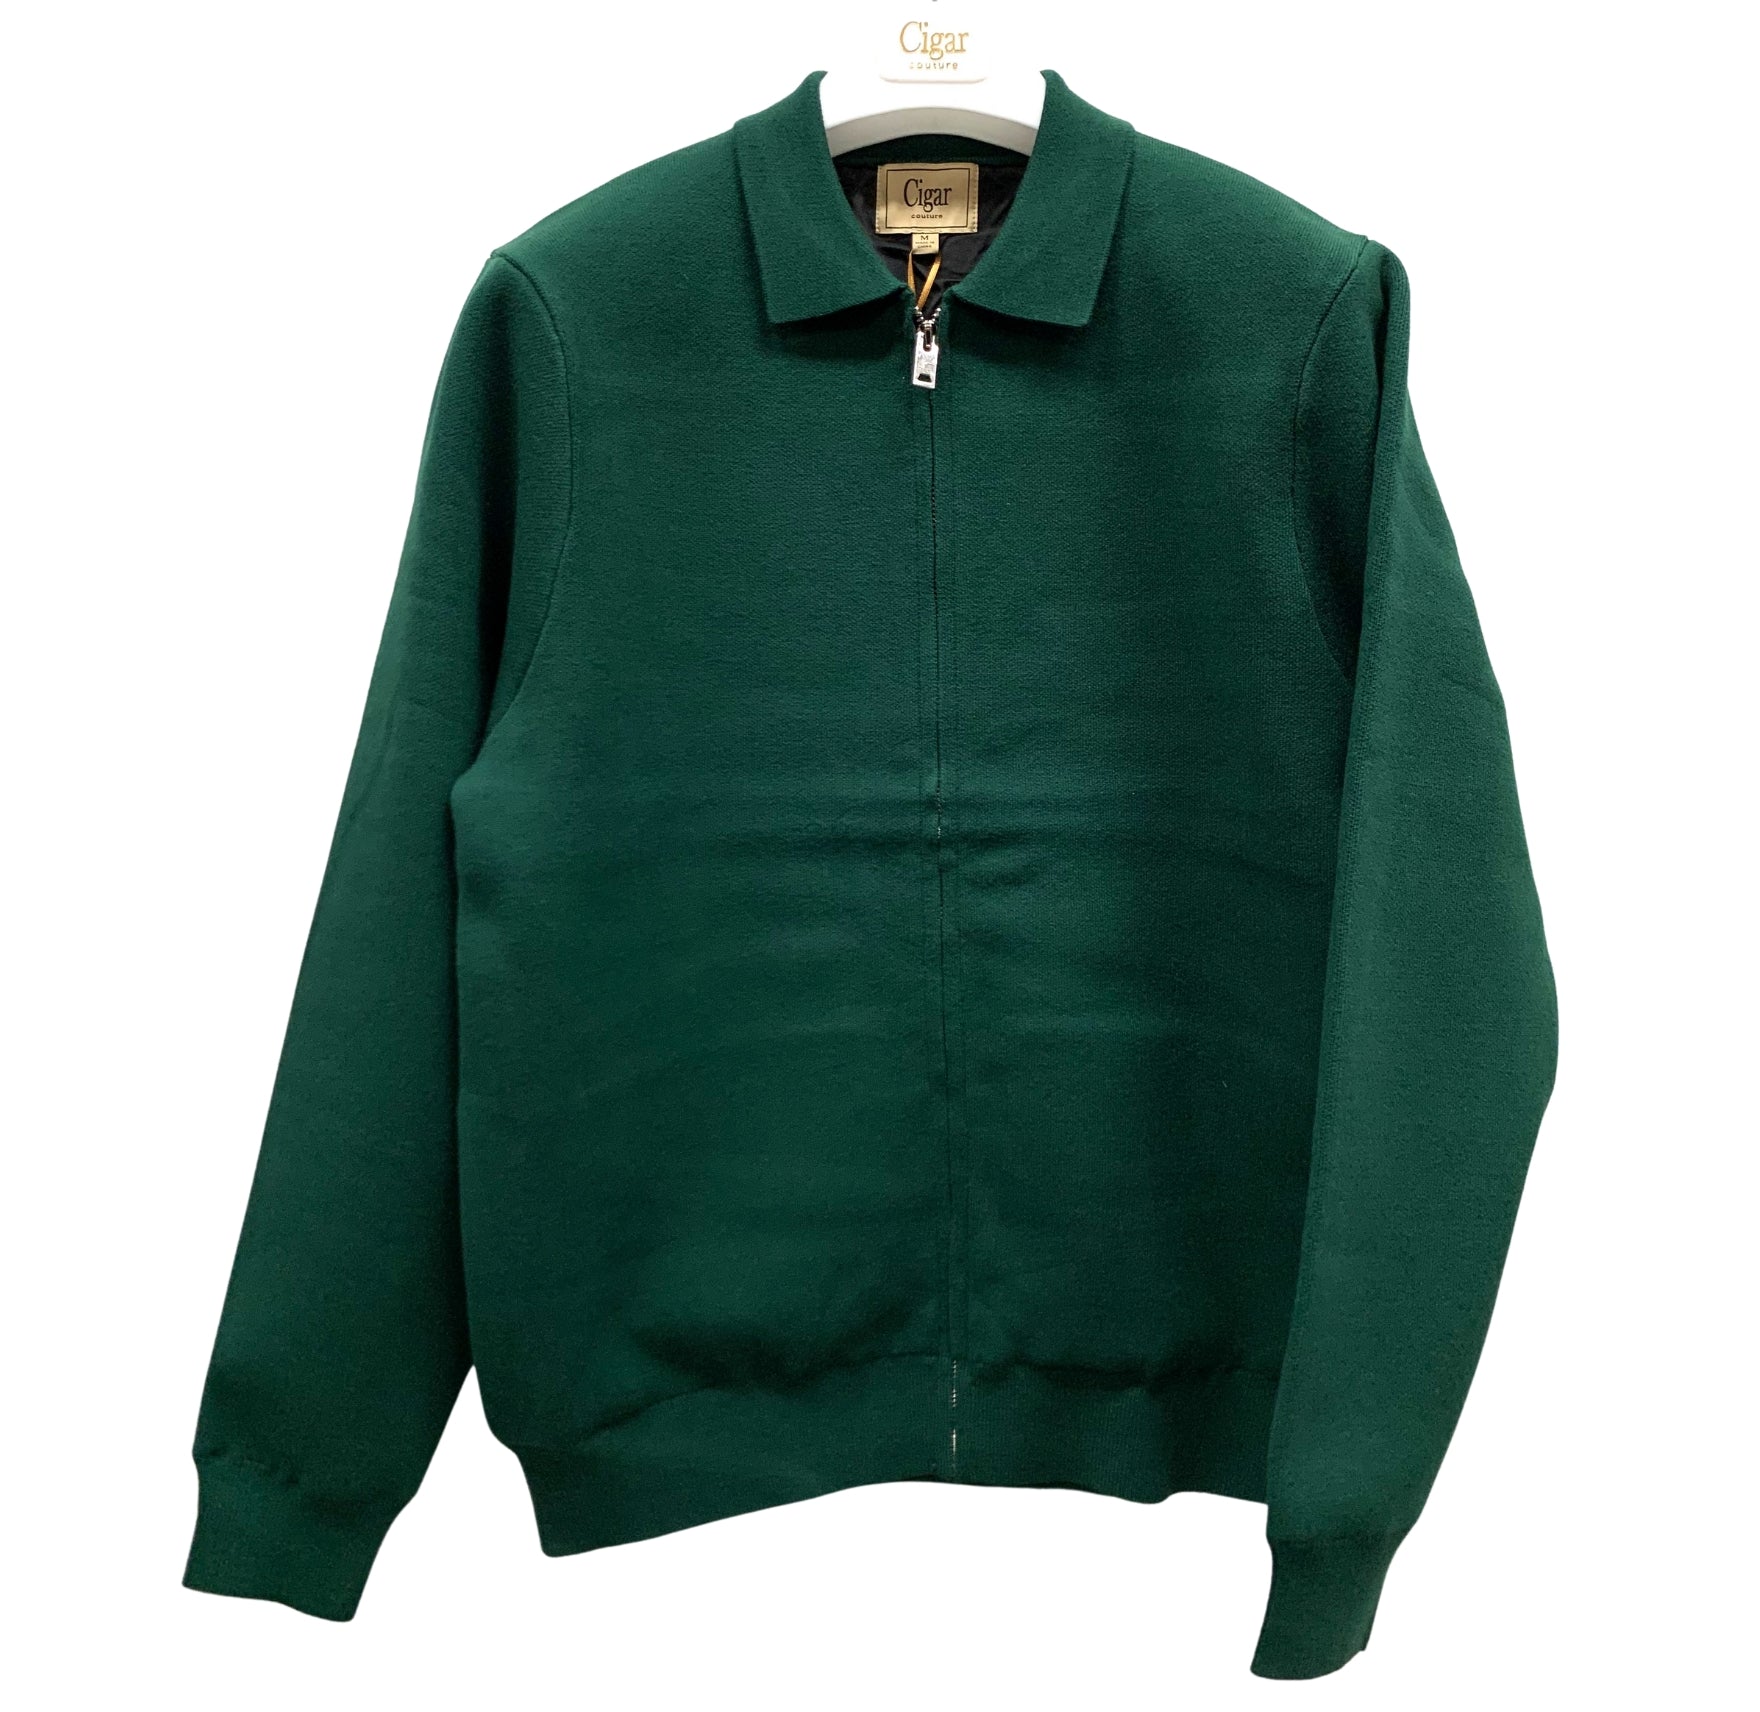 Berragamo SWJ-1478 Sweater Jacket - Forest